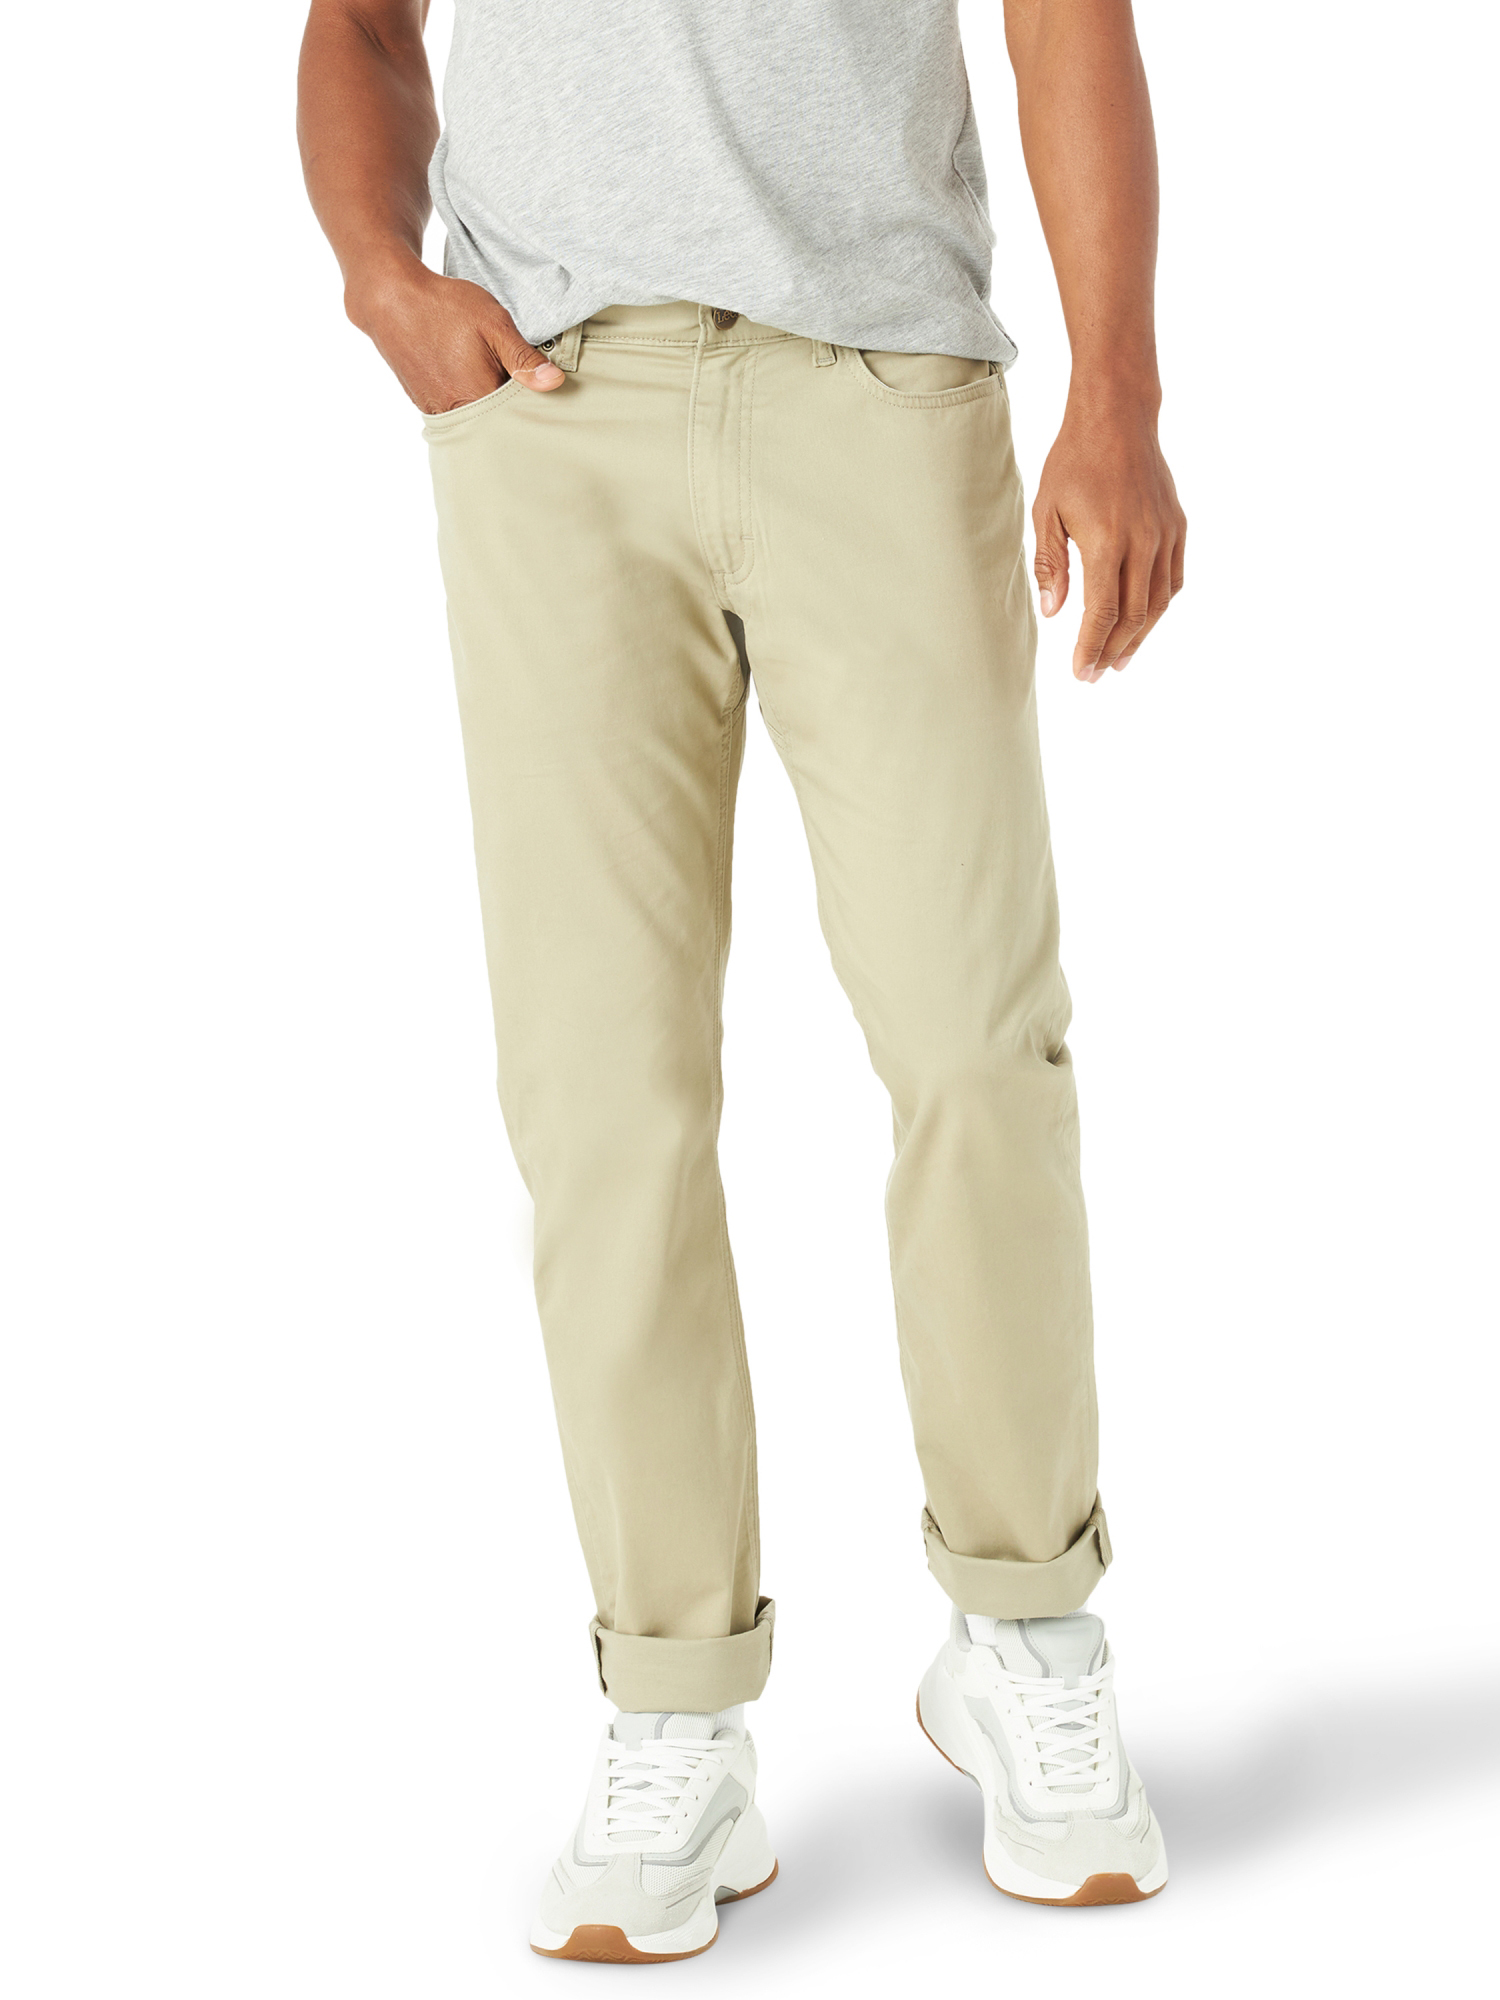 Lee Men's Extreme Motion Straight Fit 5 Pocket Pant - Walmart.com